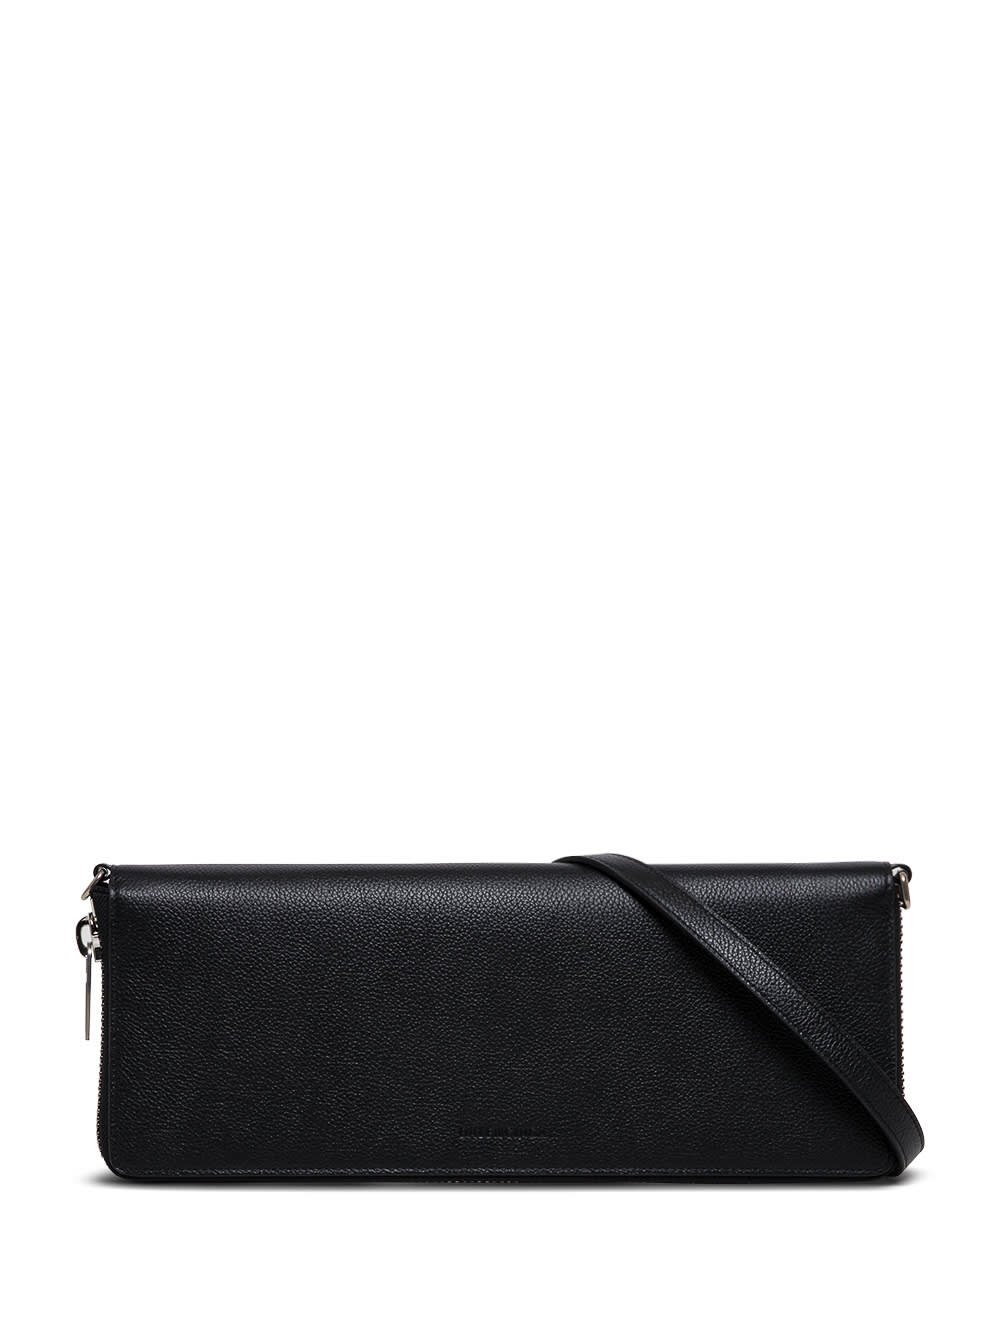 Balenciaga Rectangular Black Leather Crossbody Bag